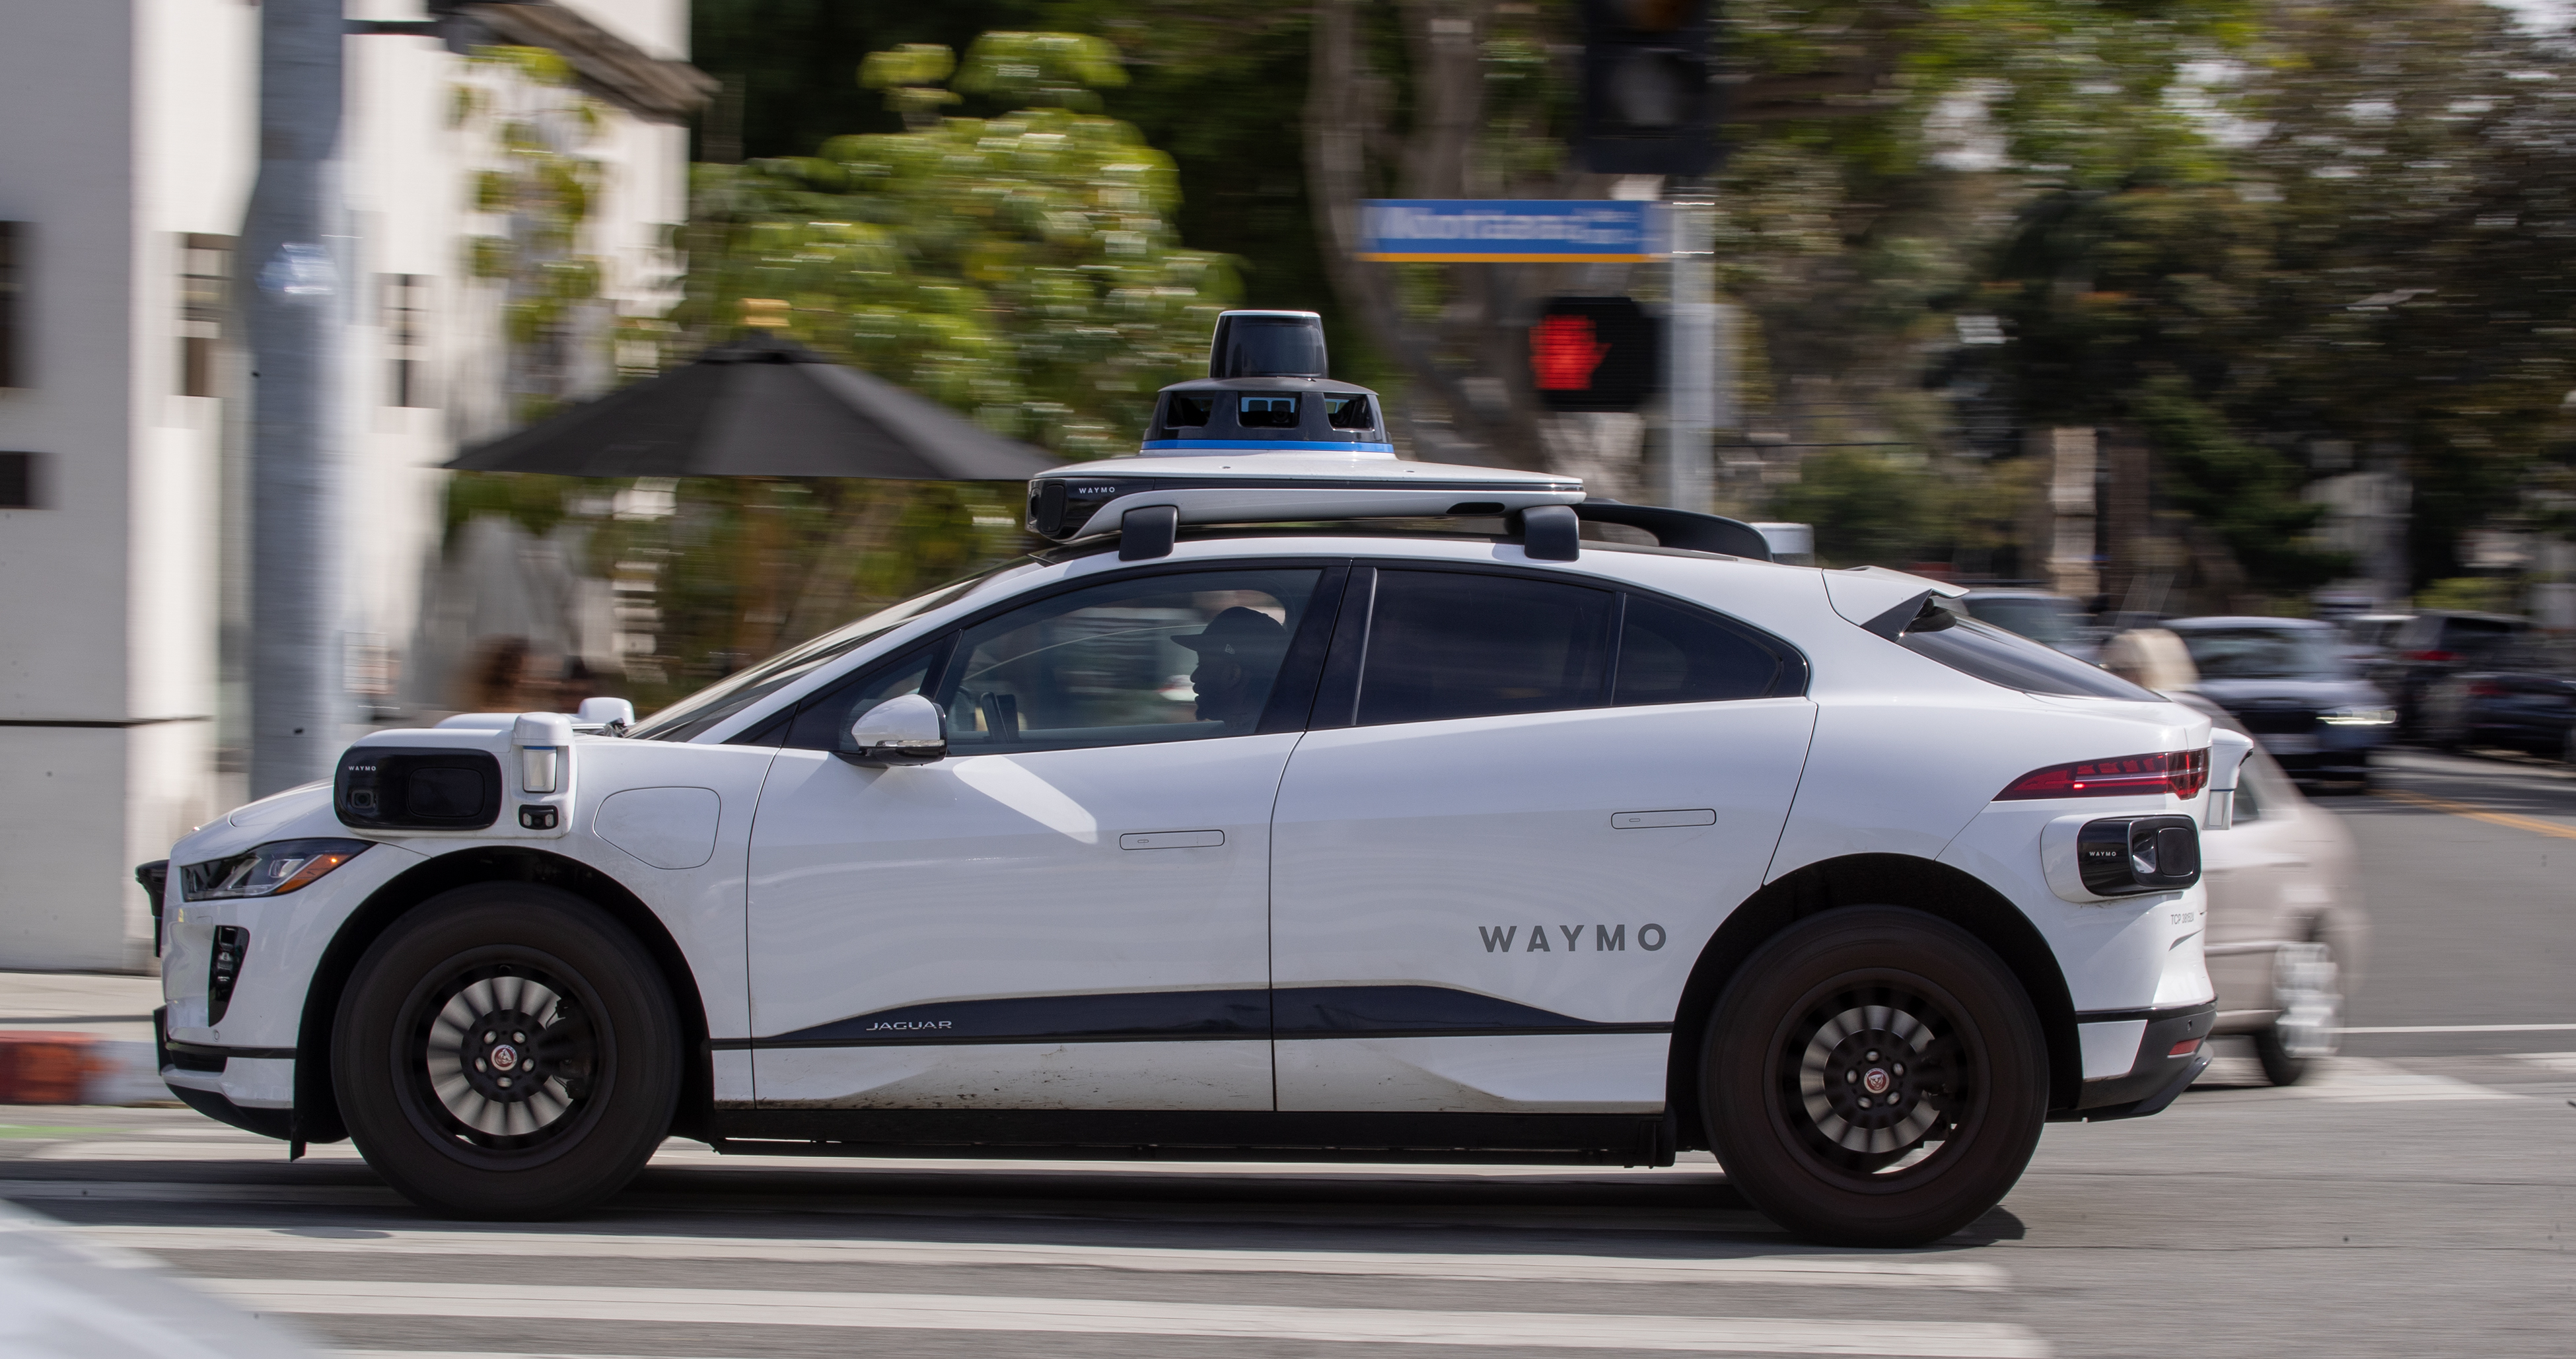 A Waymo autonomous vehicle operating on a tree-lined street in Santa Monica.